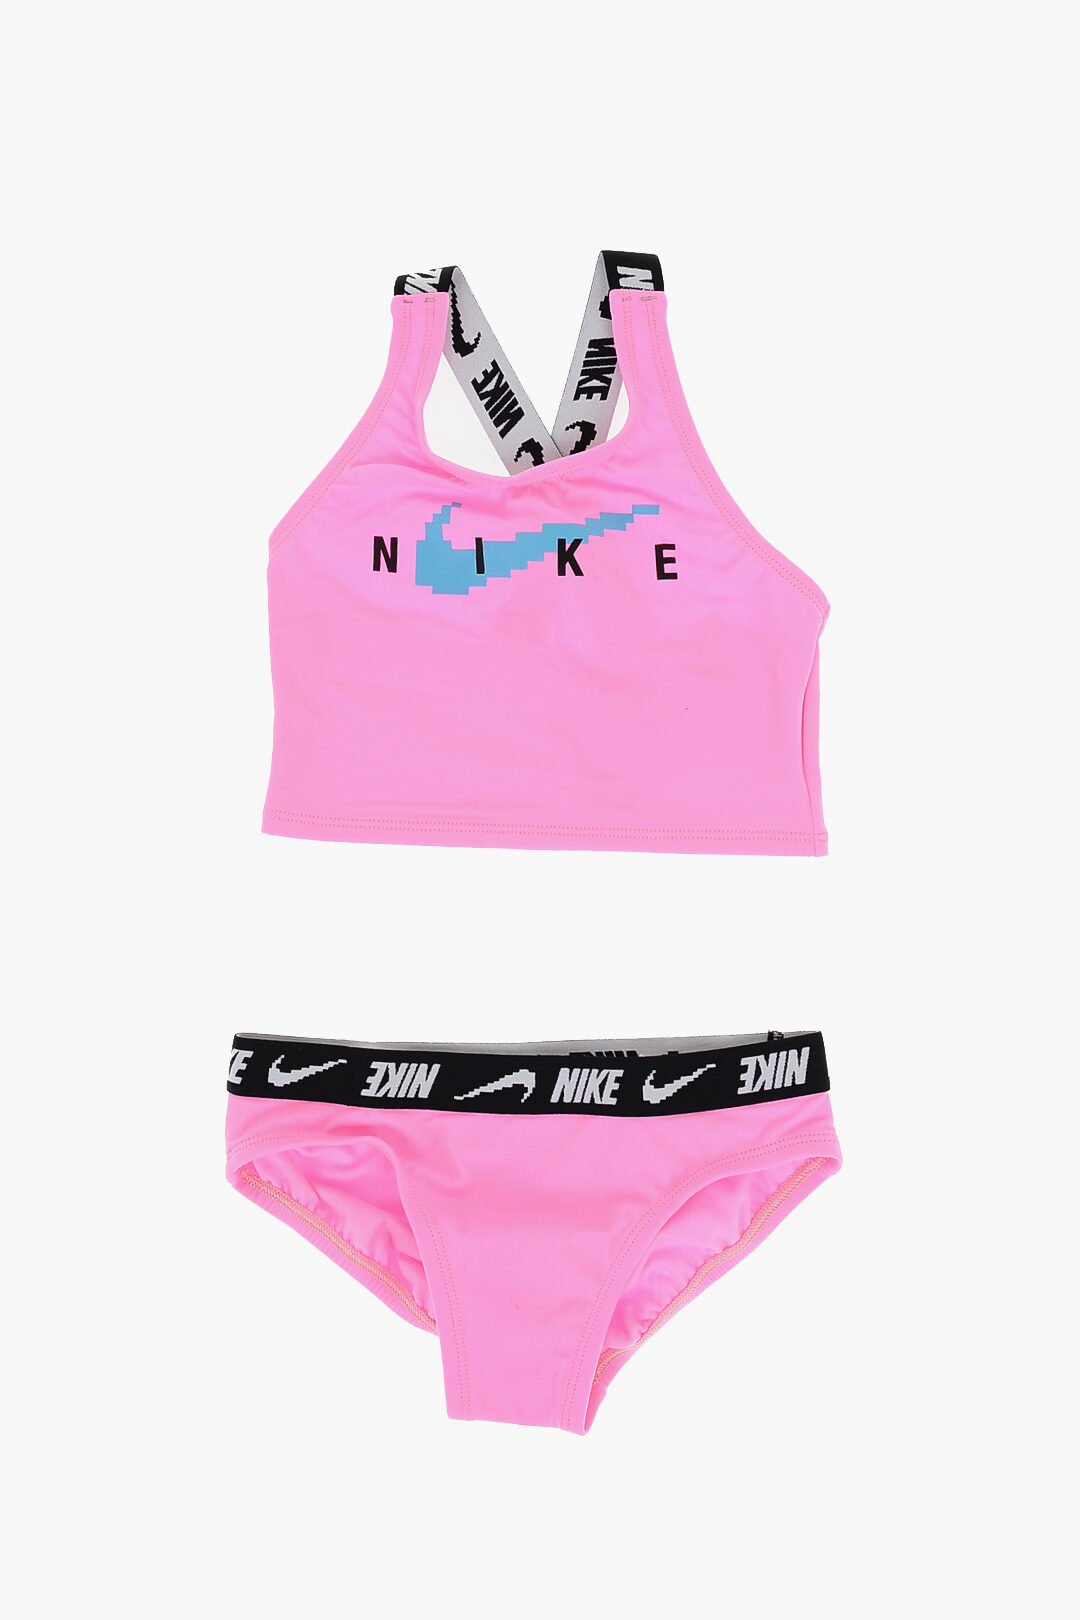 Nike KIDS SWIM Solid Color Bikini with Logoed Bands girls - Glamood Outlet